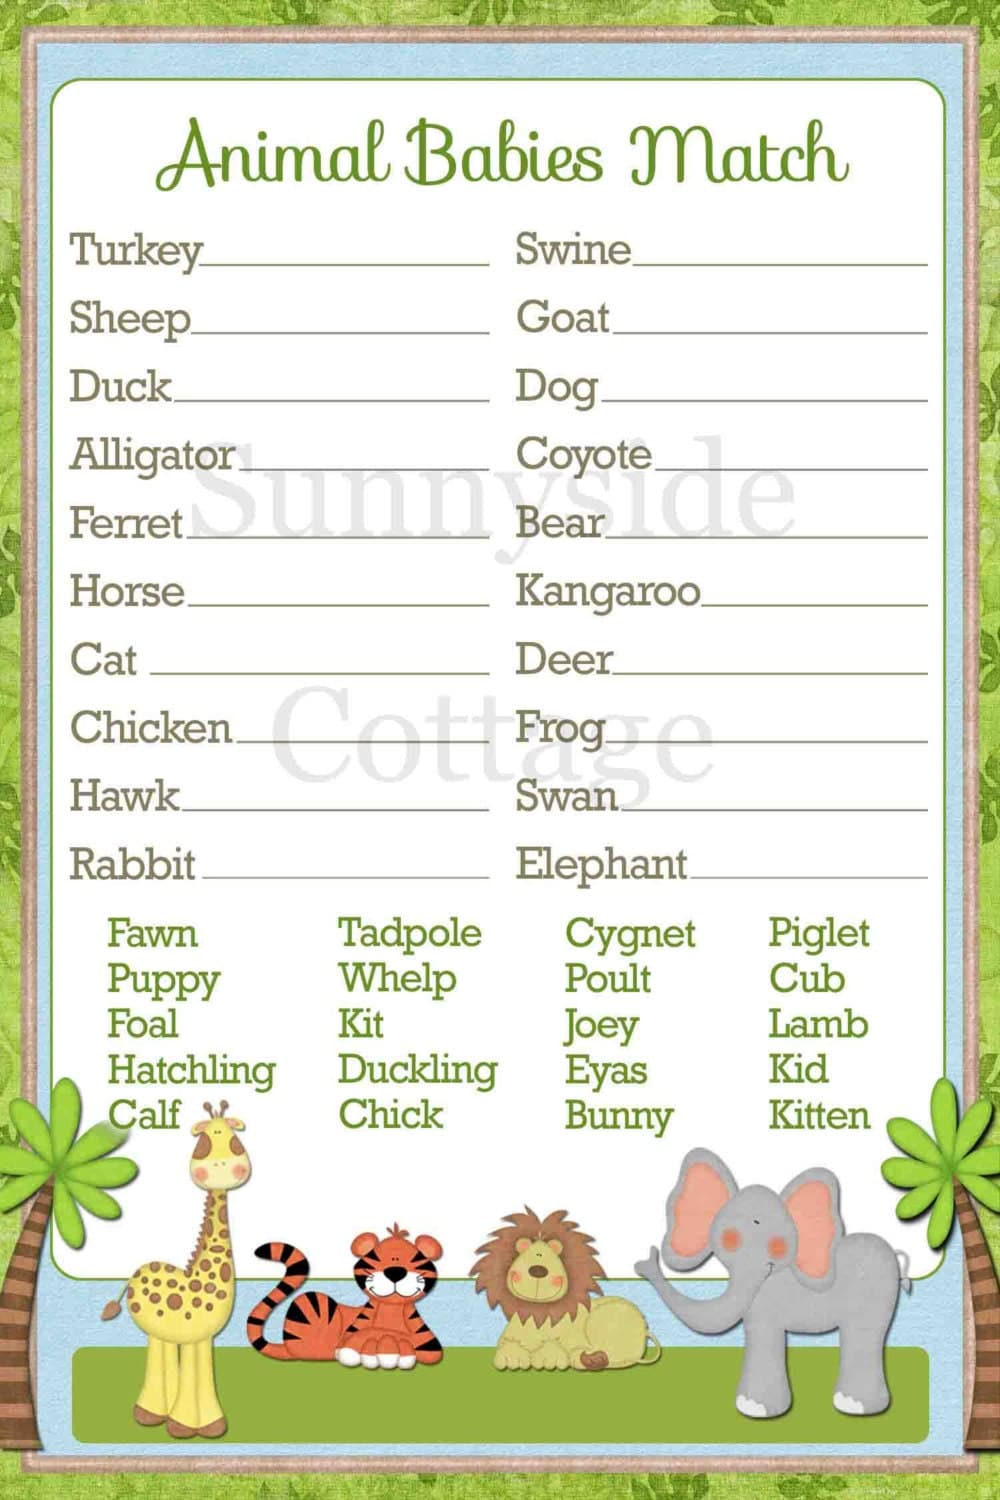 match baby animal names game